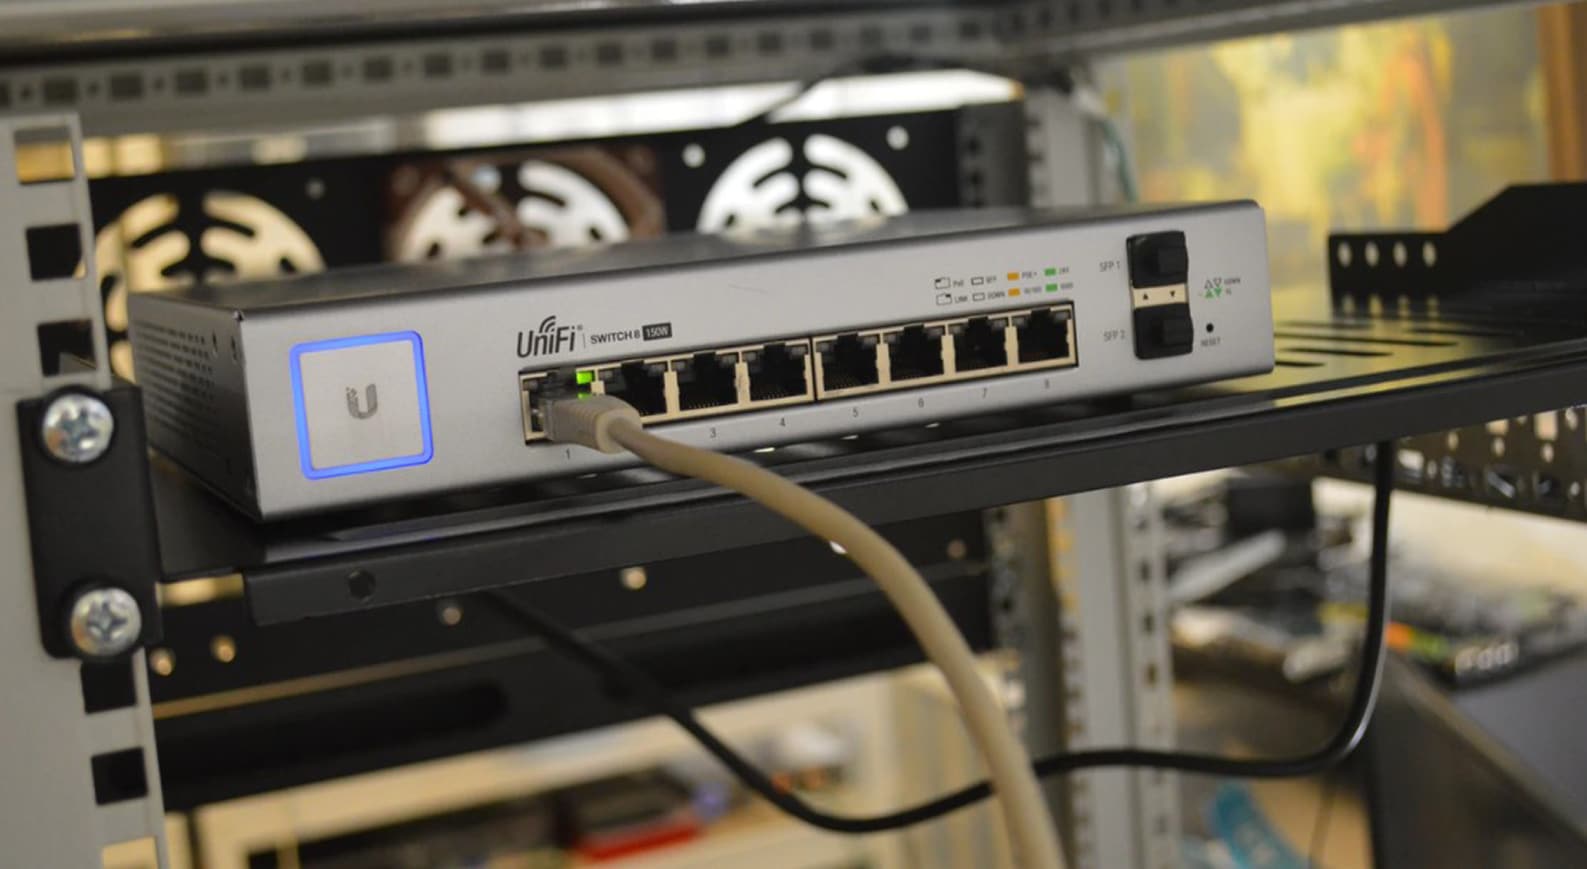 Does an Ethernet splitter slow down speed?